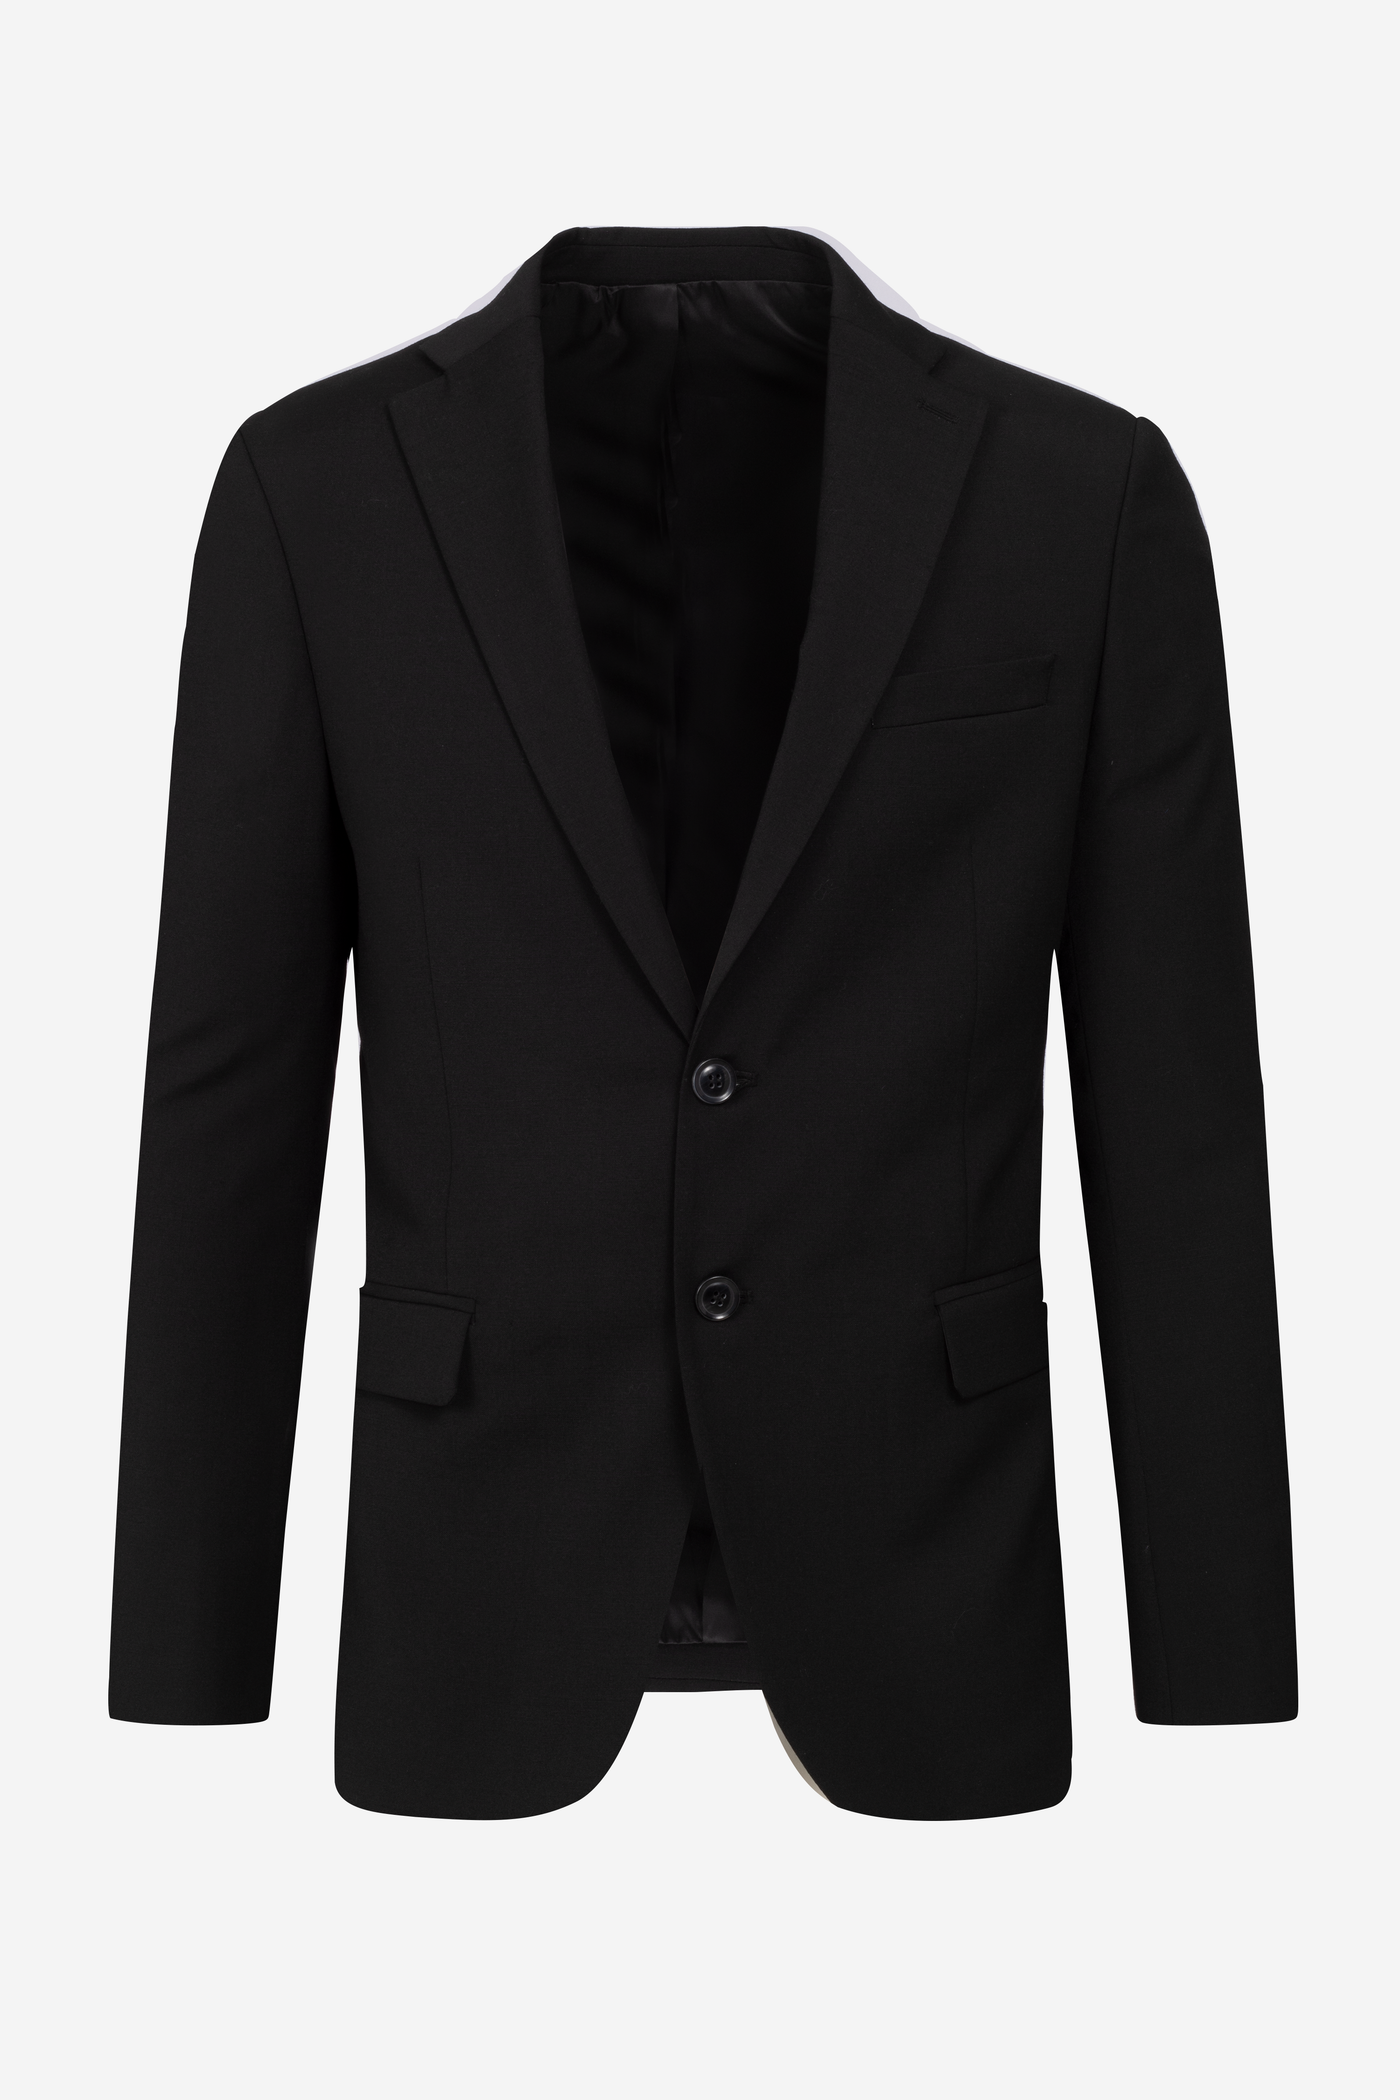 Pitch Black Wool Suit